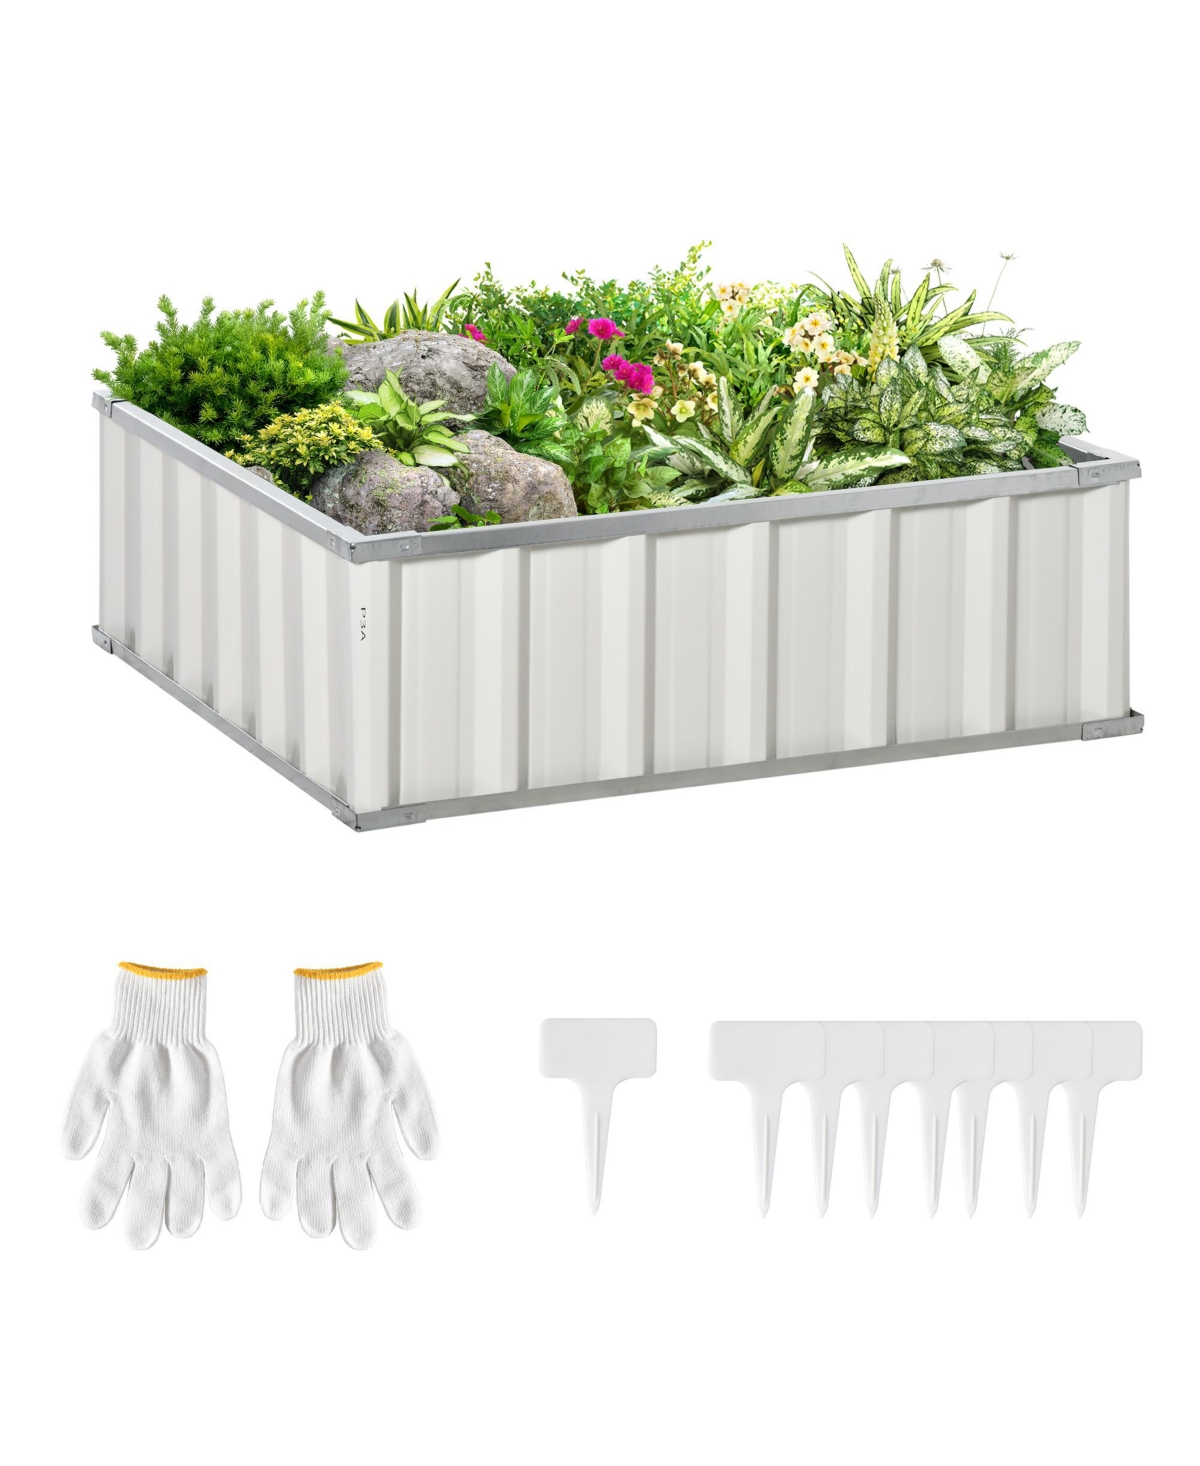 Metal Raised Garden Bed No Bottom Planter Box w/ Gloves for Backyard - White